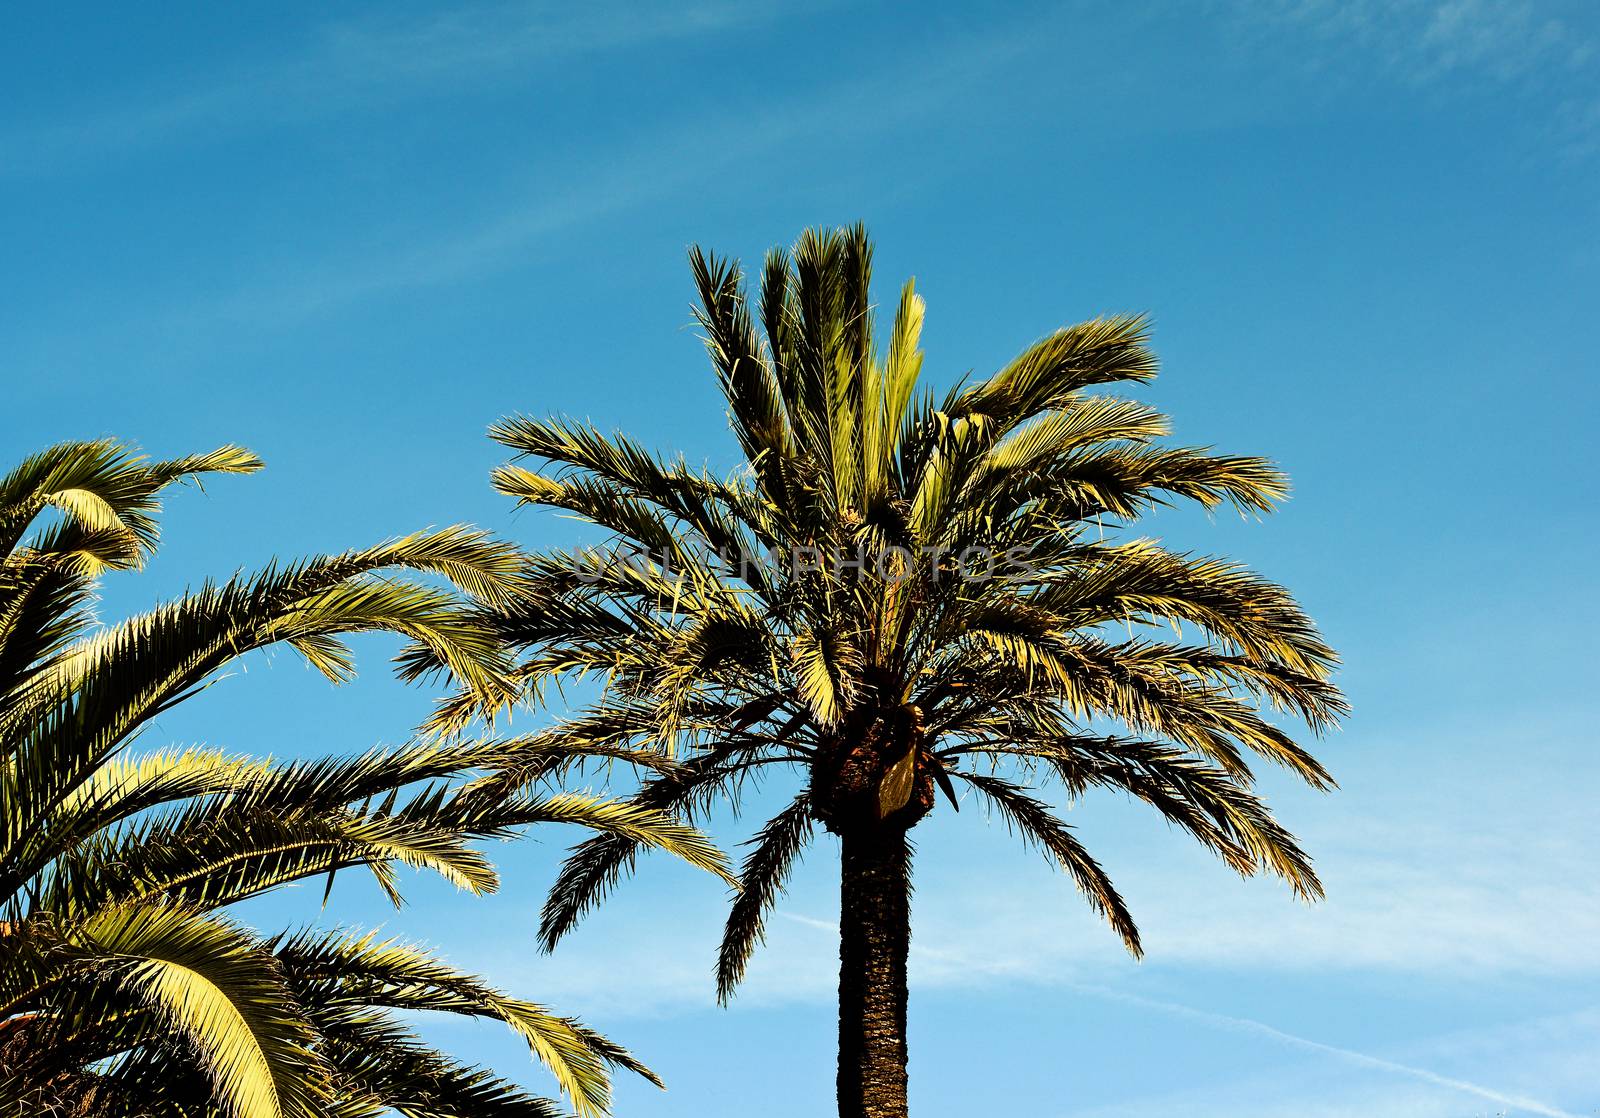 Palm Trees on Blue Sky by zhekos